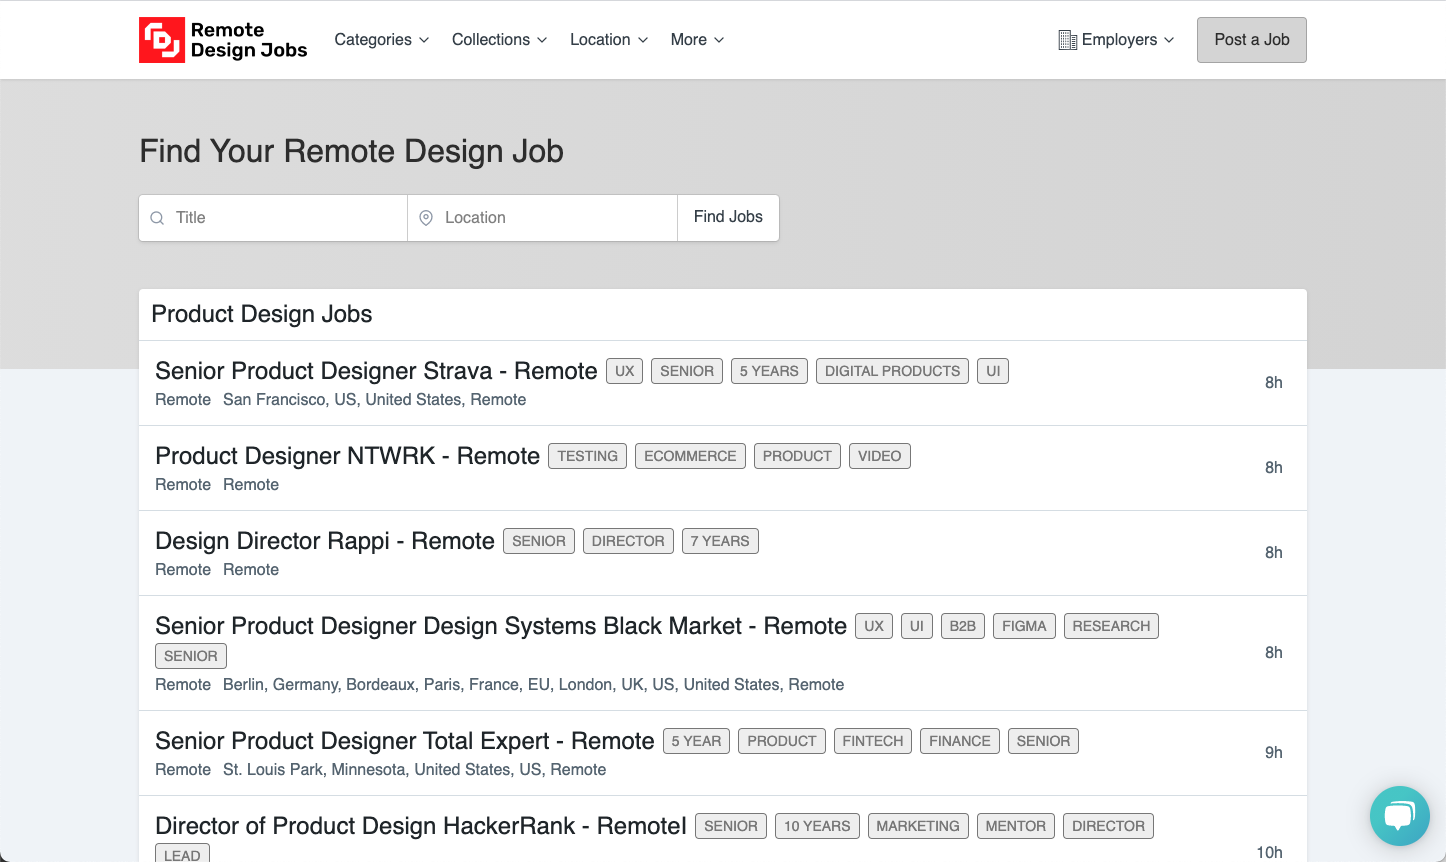 Find detailed information about Remote Design Jobs